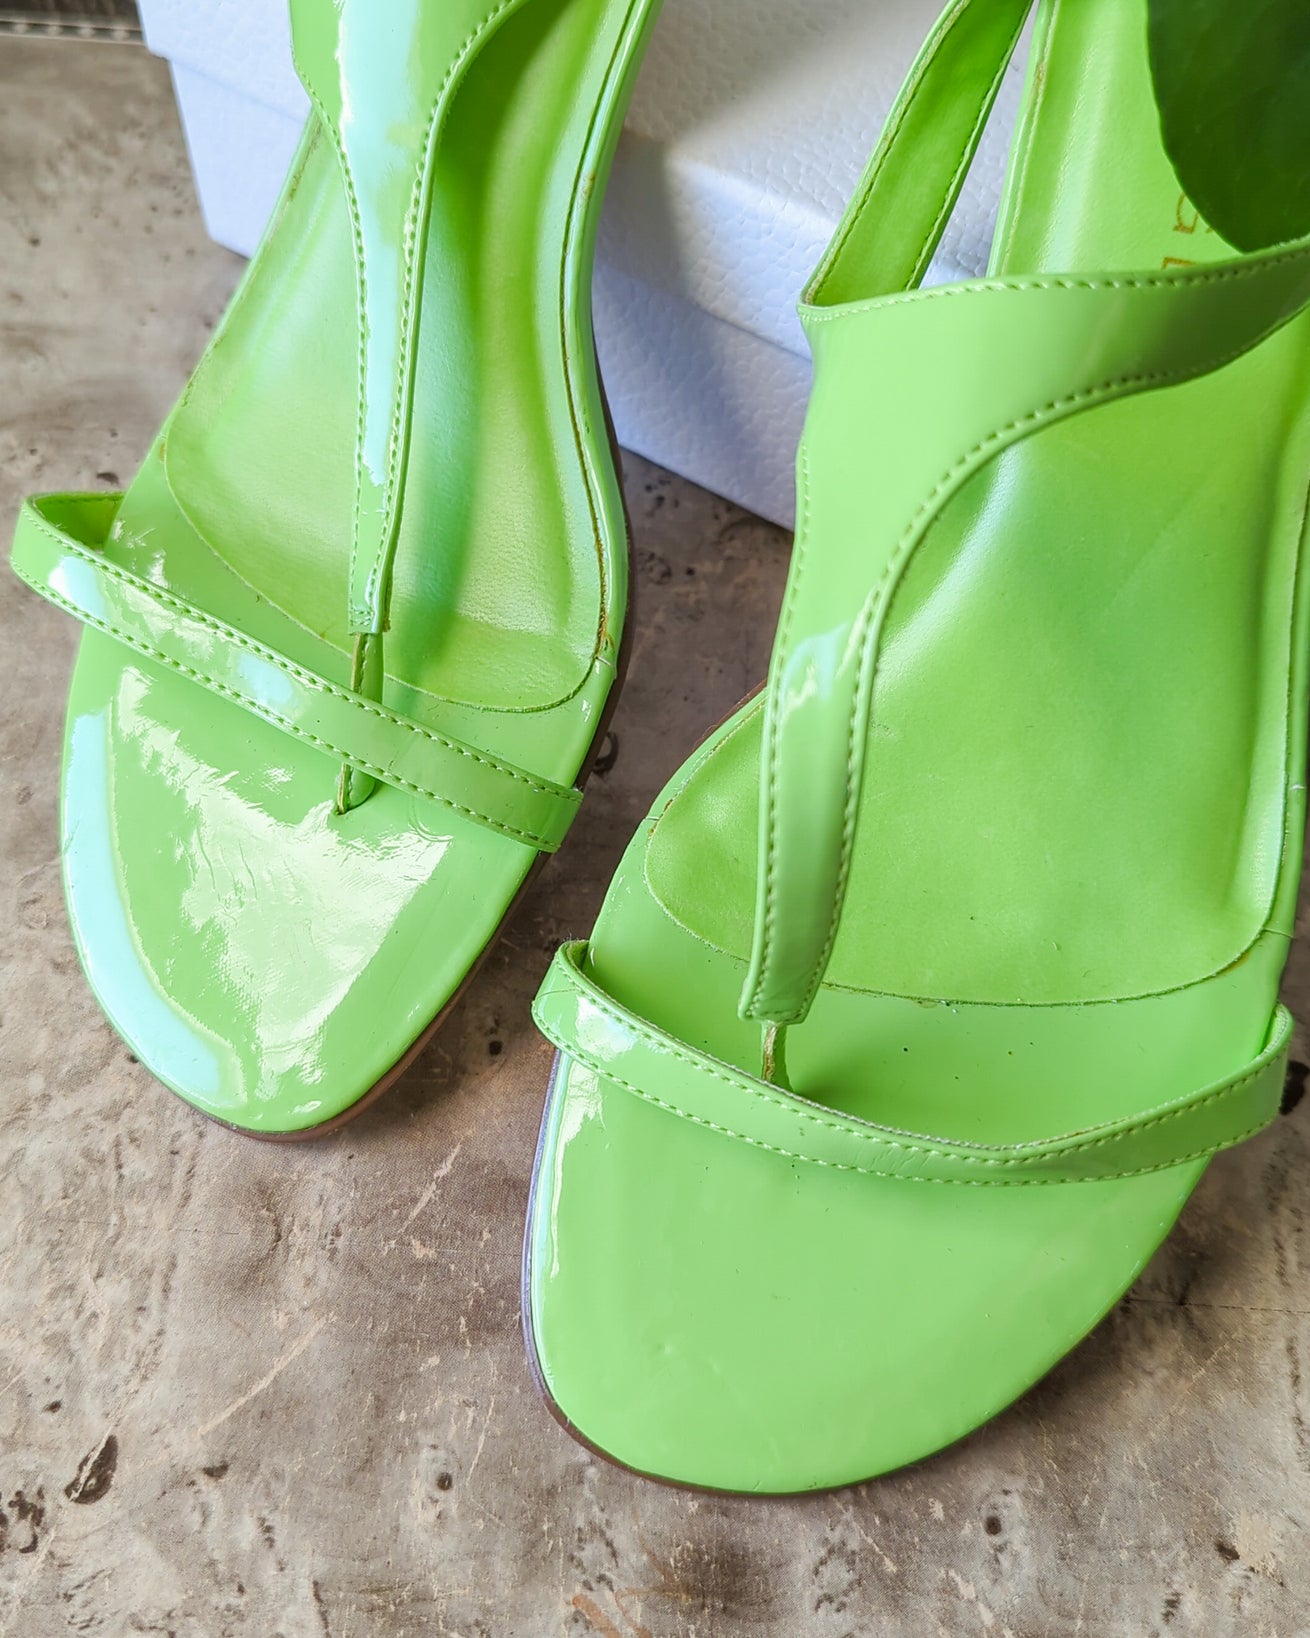 Spring Summer Women High Heels Shoes Pointed Toe Matel Heels Pumps Fas –  Models Industry